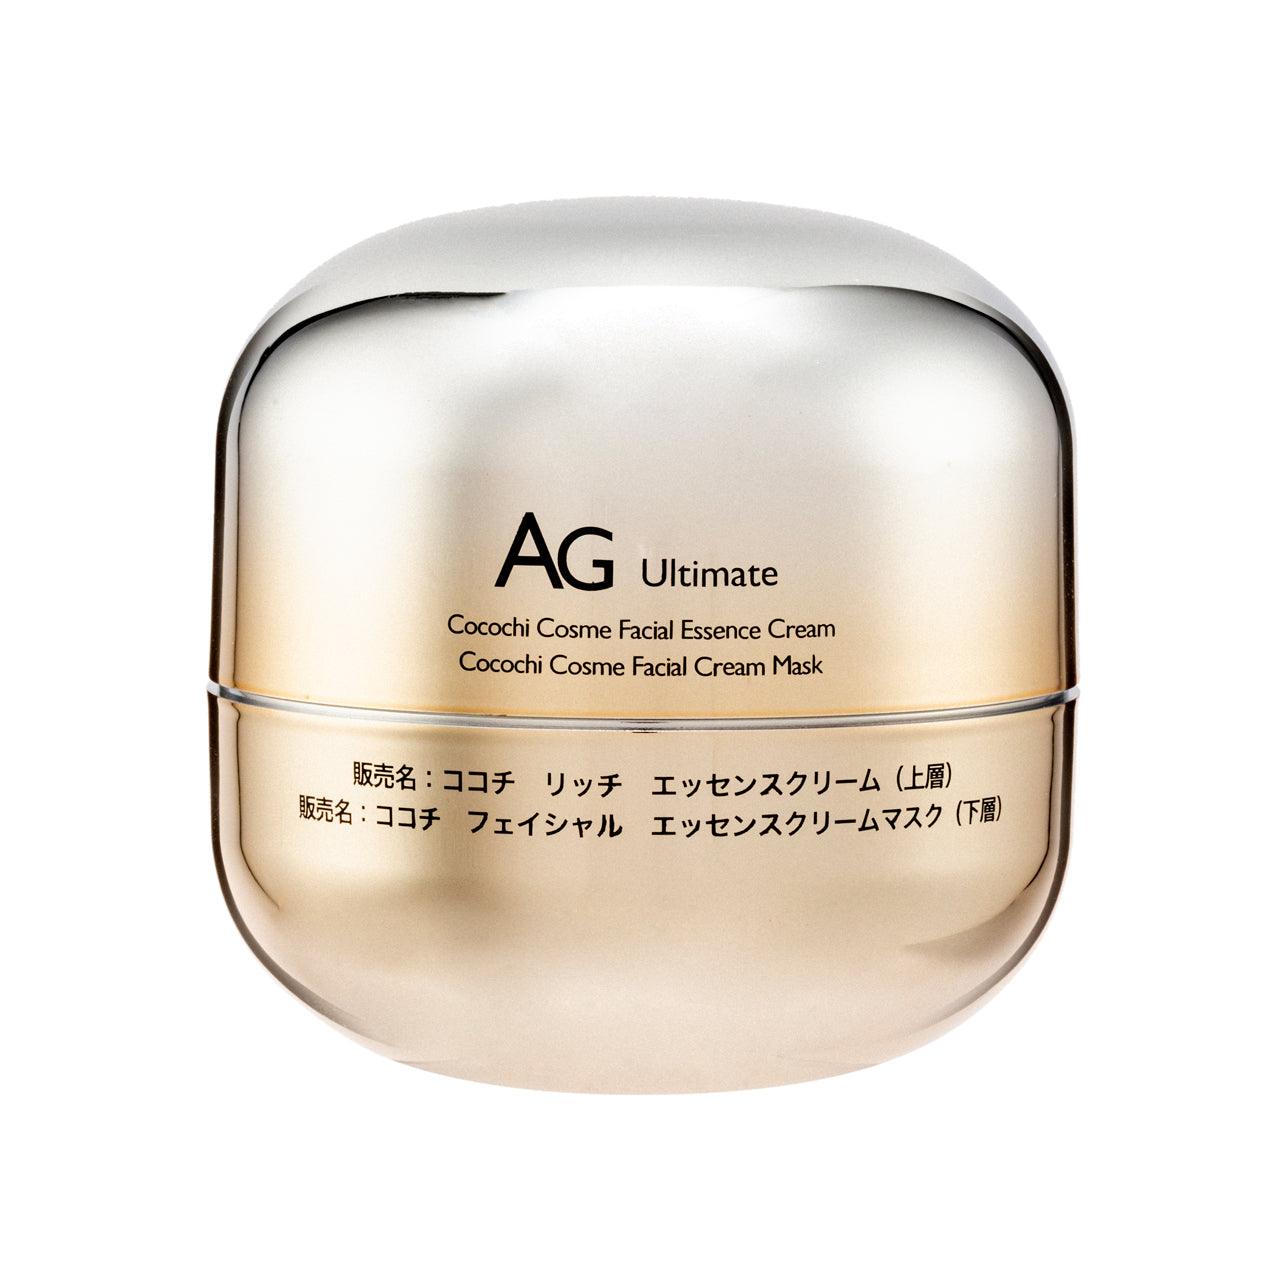 Cocochi Cosme Ag Ultimate Facial Cream Mask 20G+90G | Sasa Global eShop